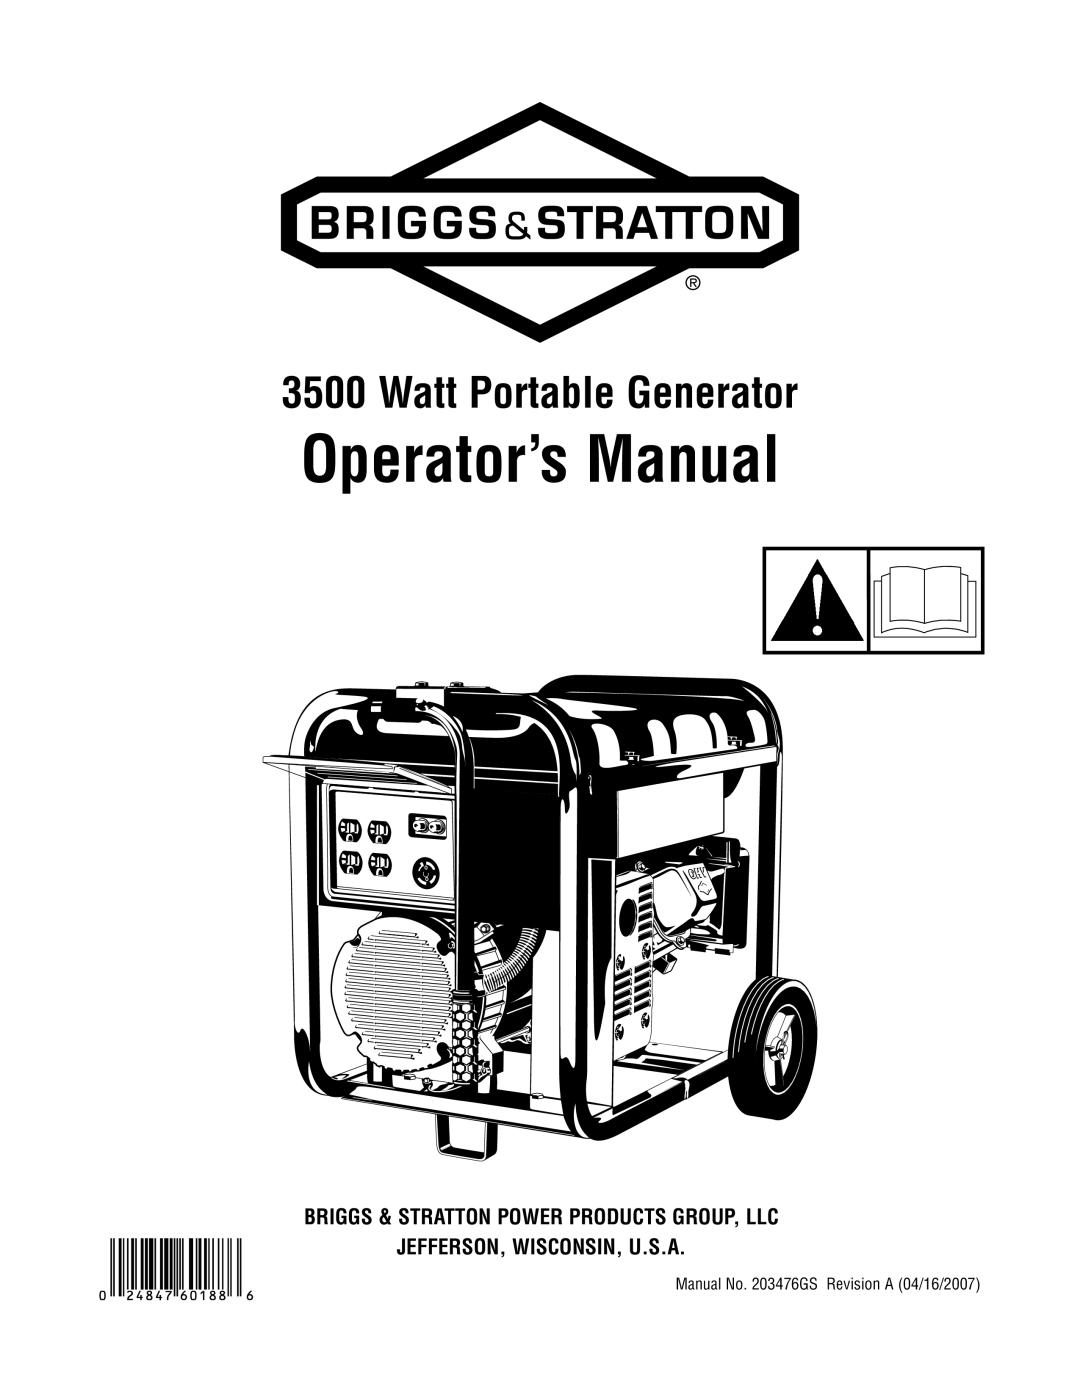 Briggs & Stratton 30348 manual Operator’s Manual, Watt Portable Generator, Briggs & Stratton Power Products Group, Llc 